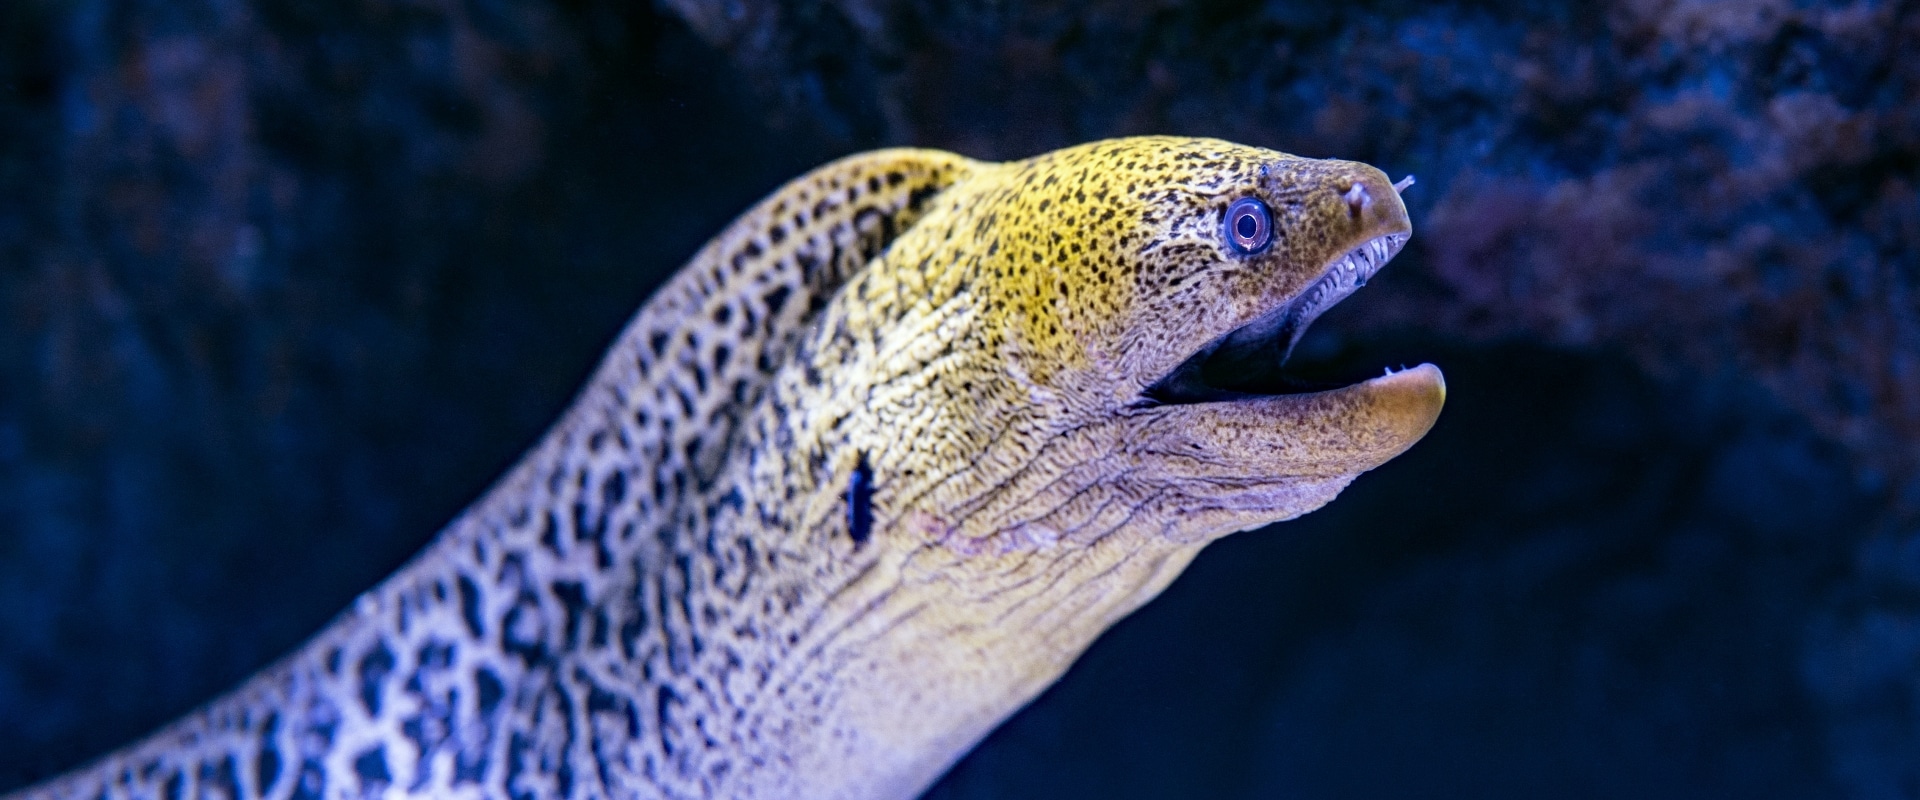 How Do Eels Reproduce